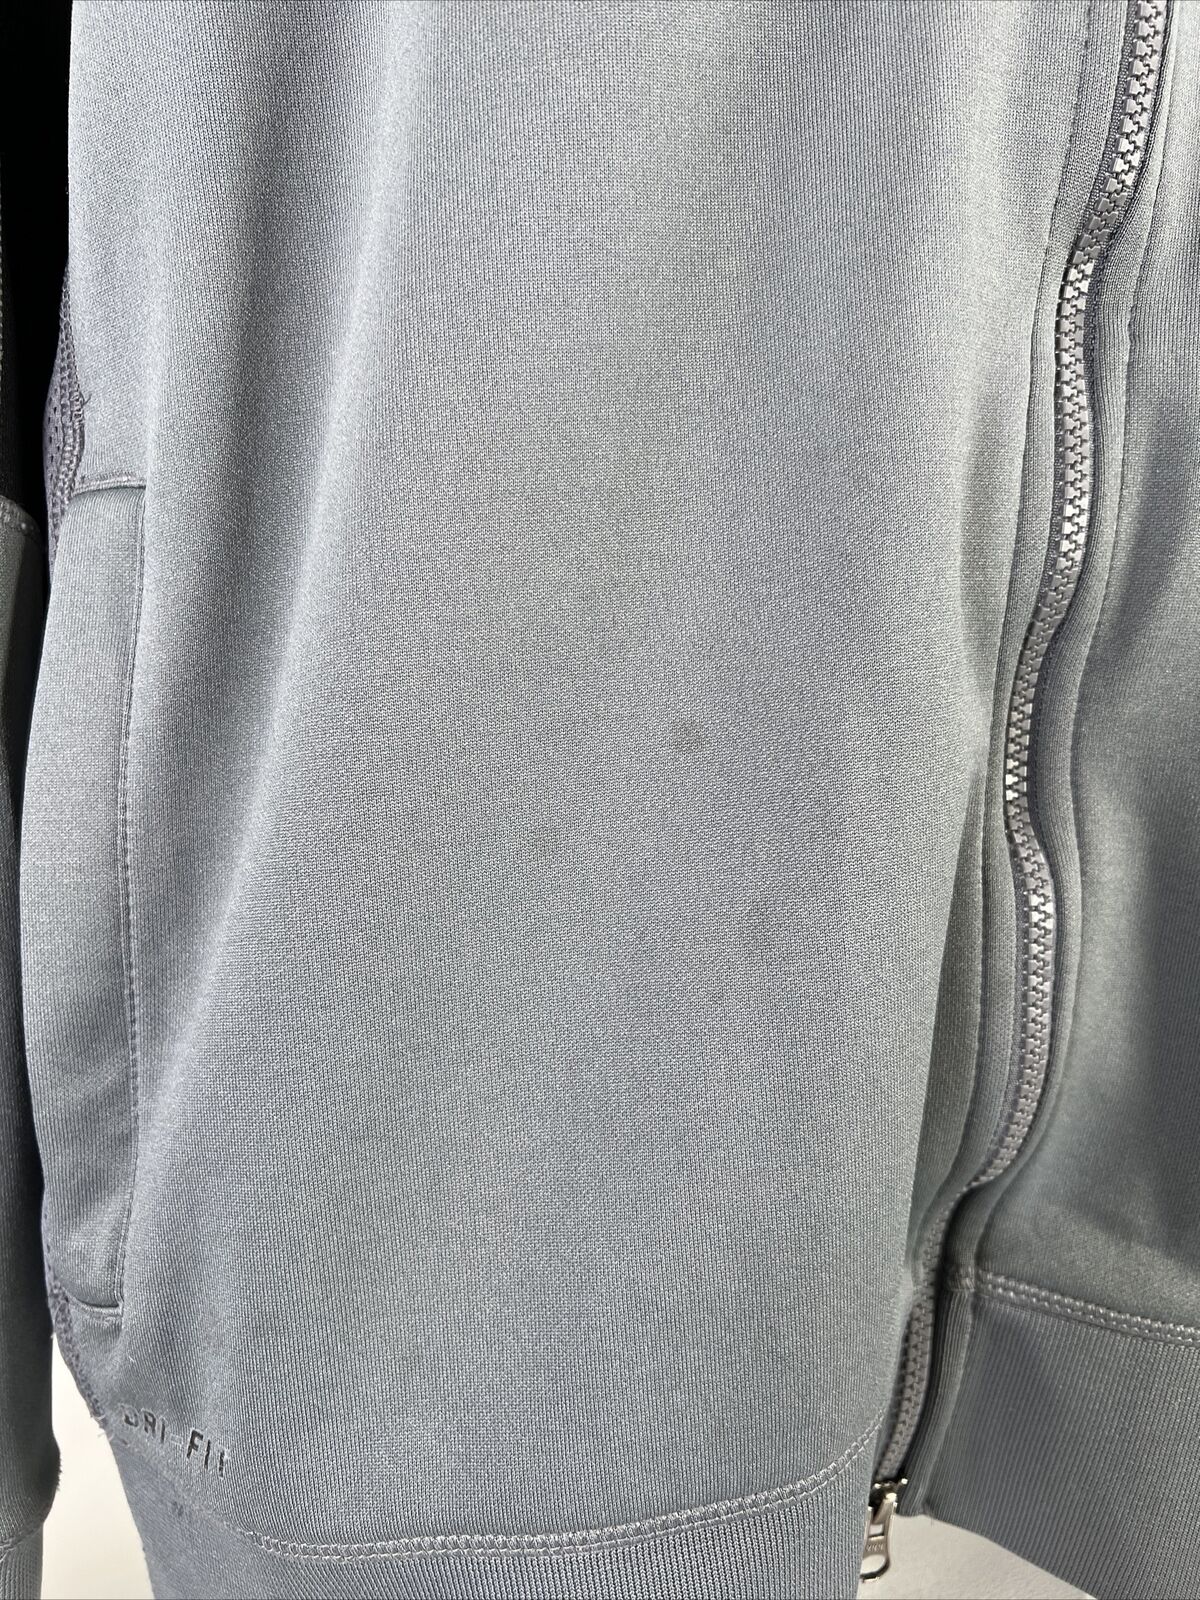 Nike Men's Gray Livestrong Full Zip Long Sleeve Athletic Jacket - L